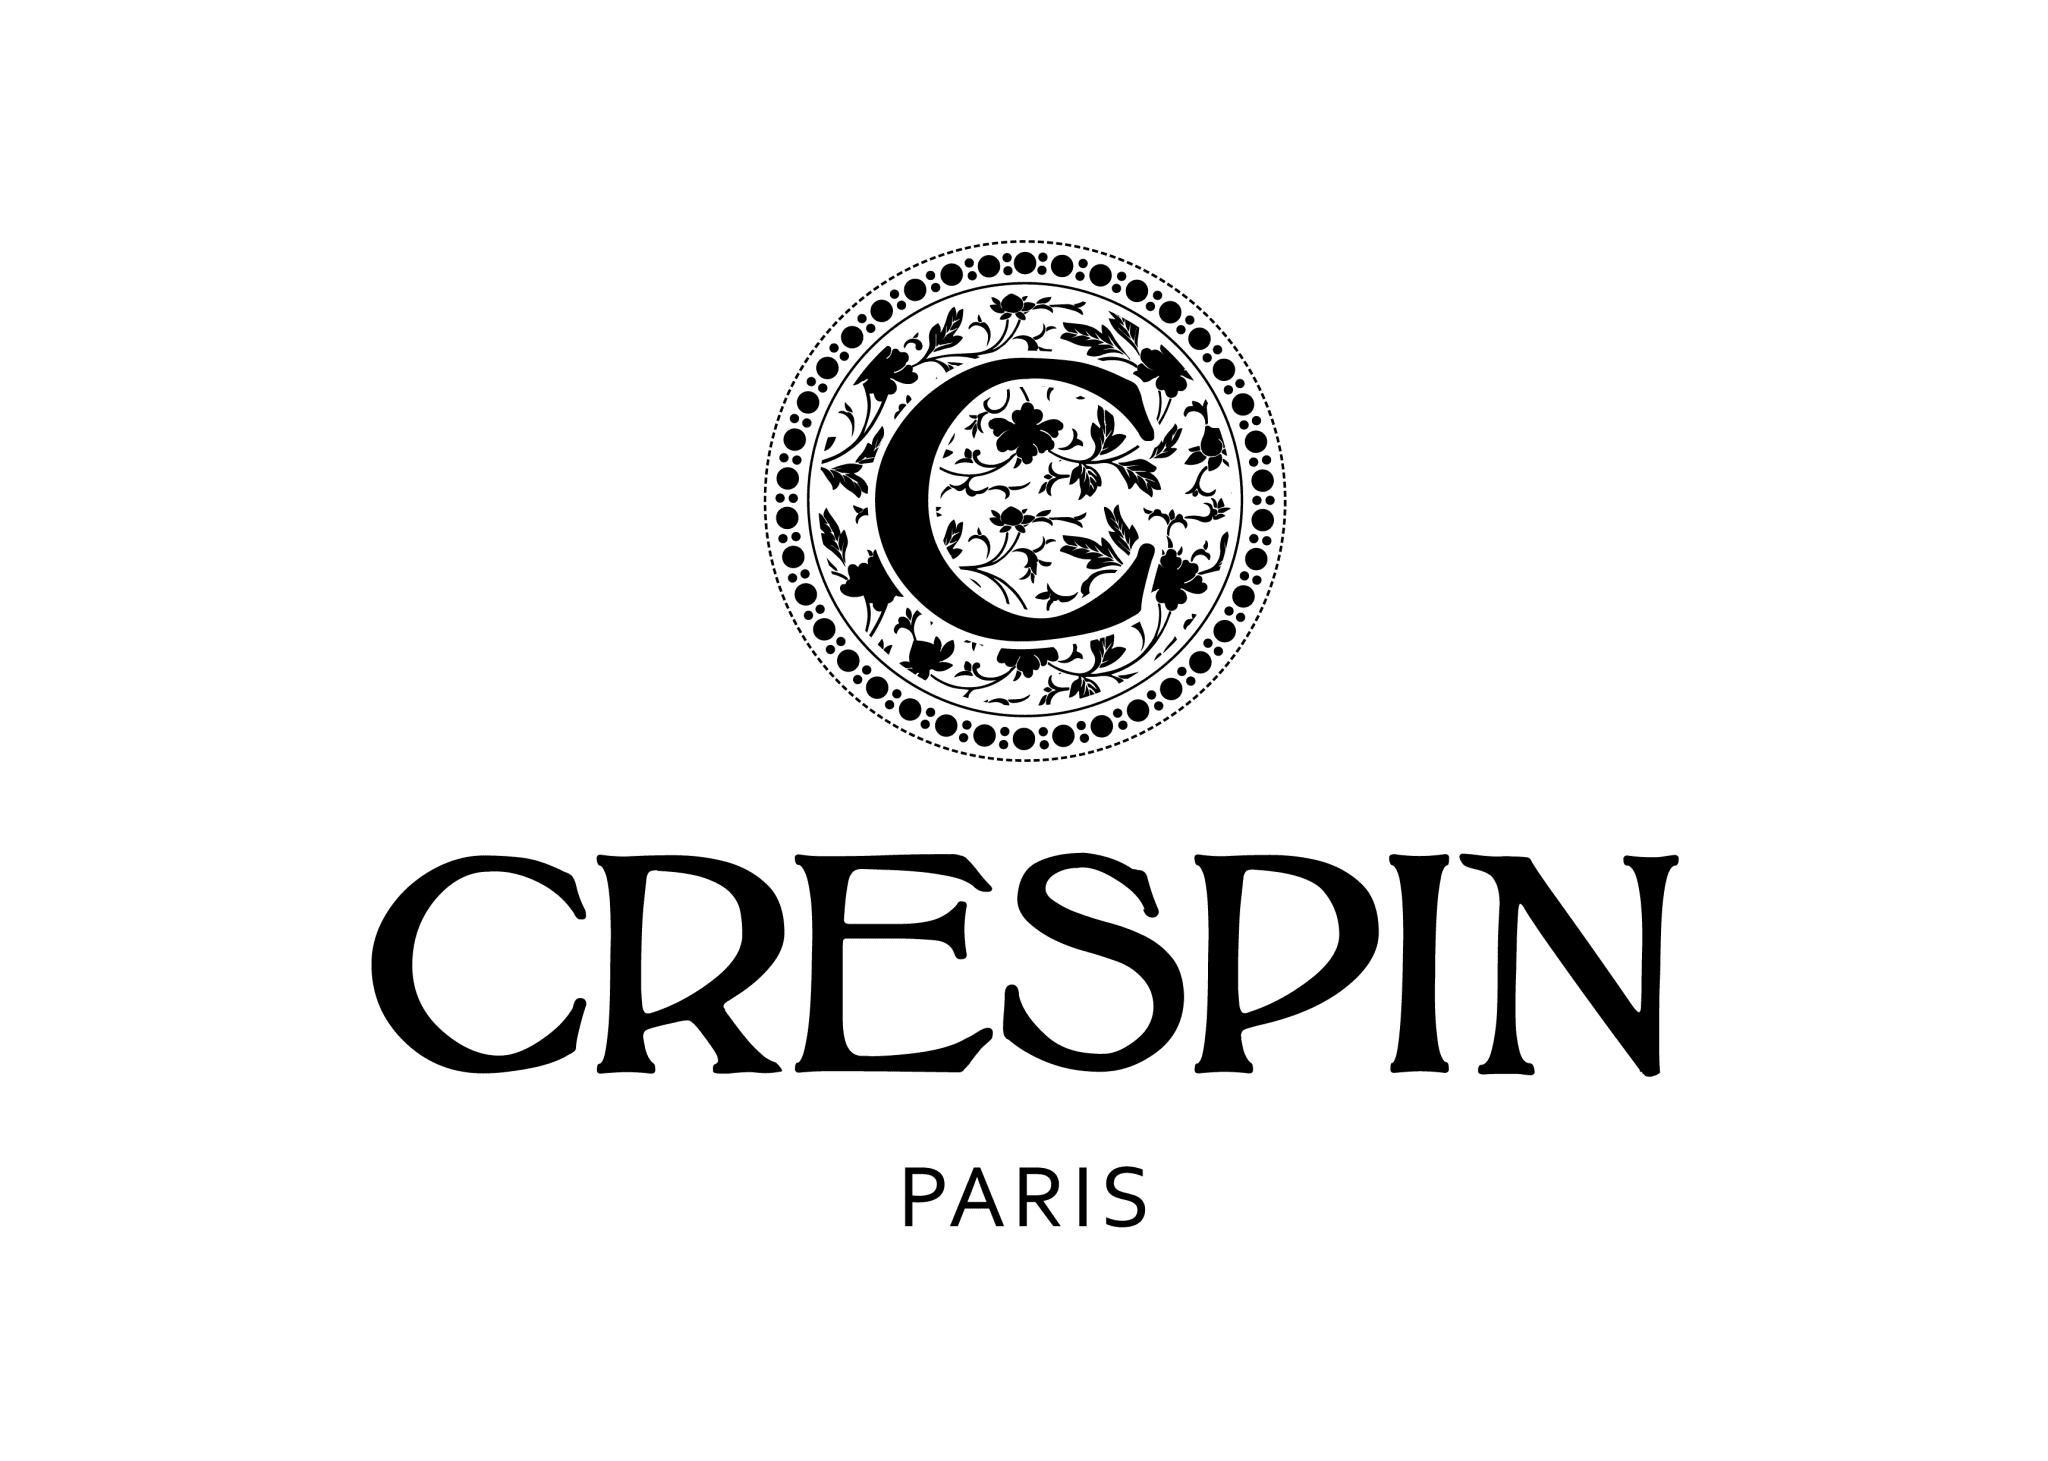 Crespin Paris